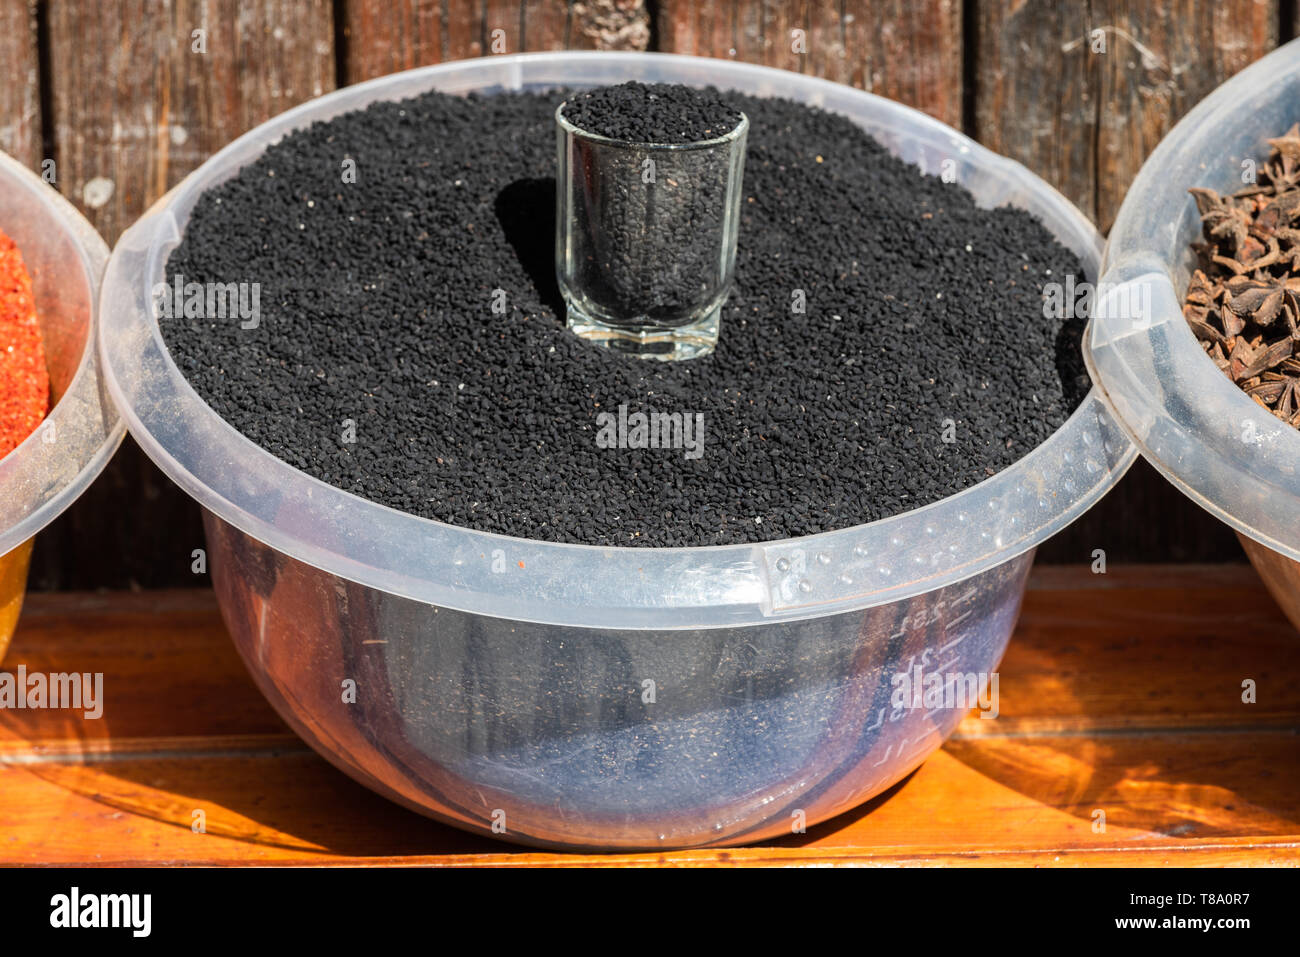 Basin of black cumin at a market in Azerbaijan. Stock Photo